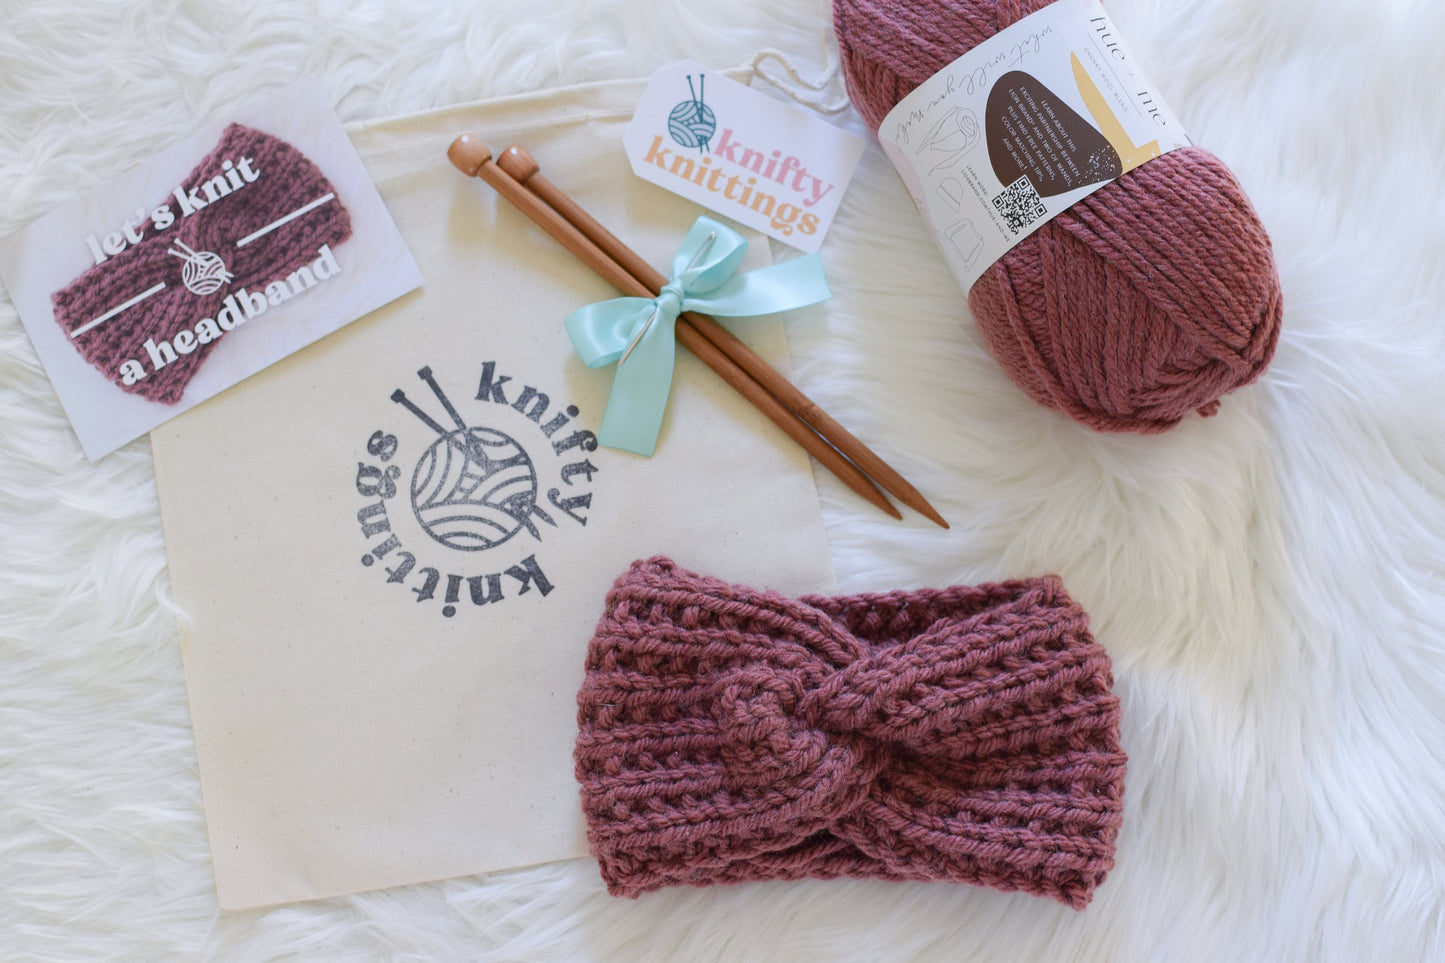 Headband Knitting Kit - Knifty Knittings